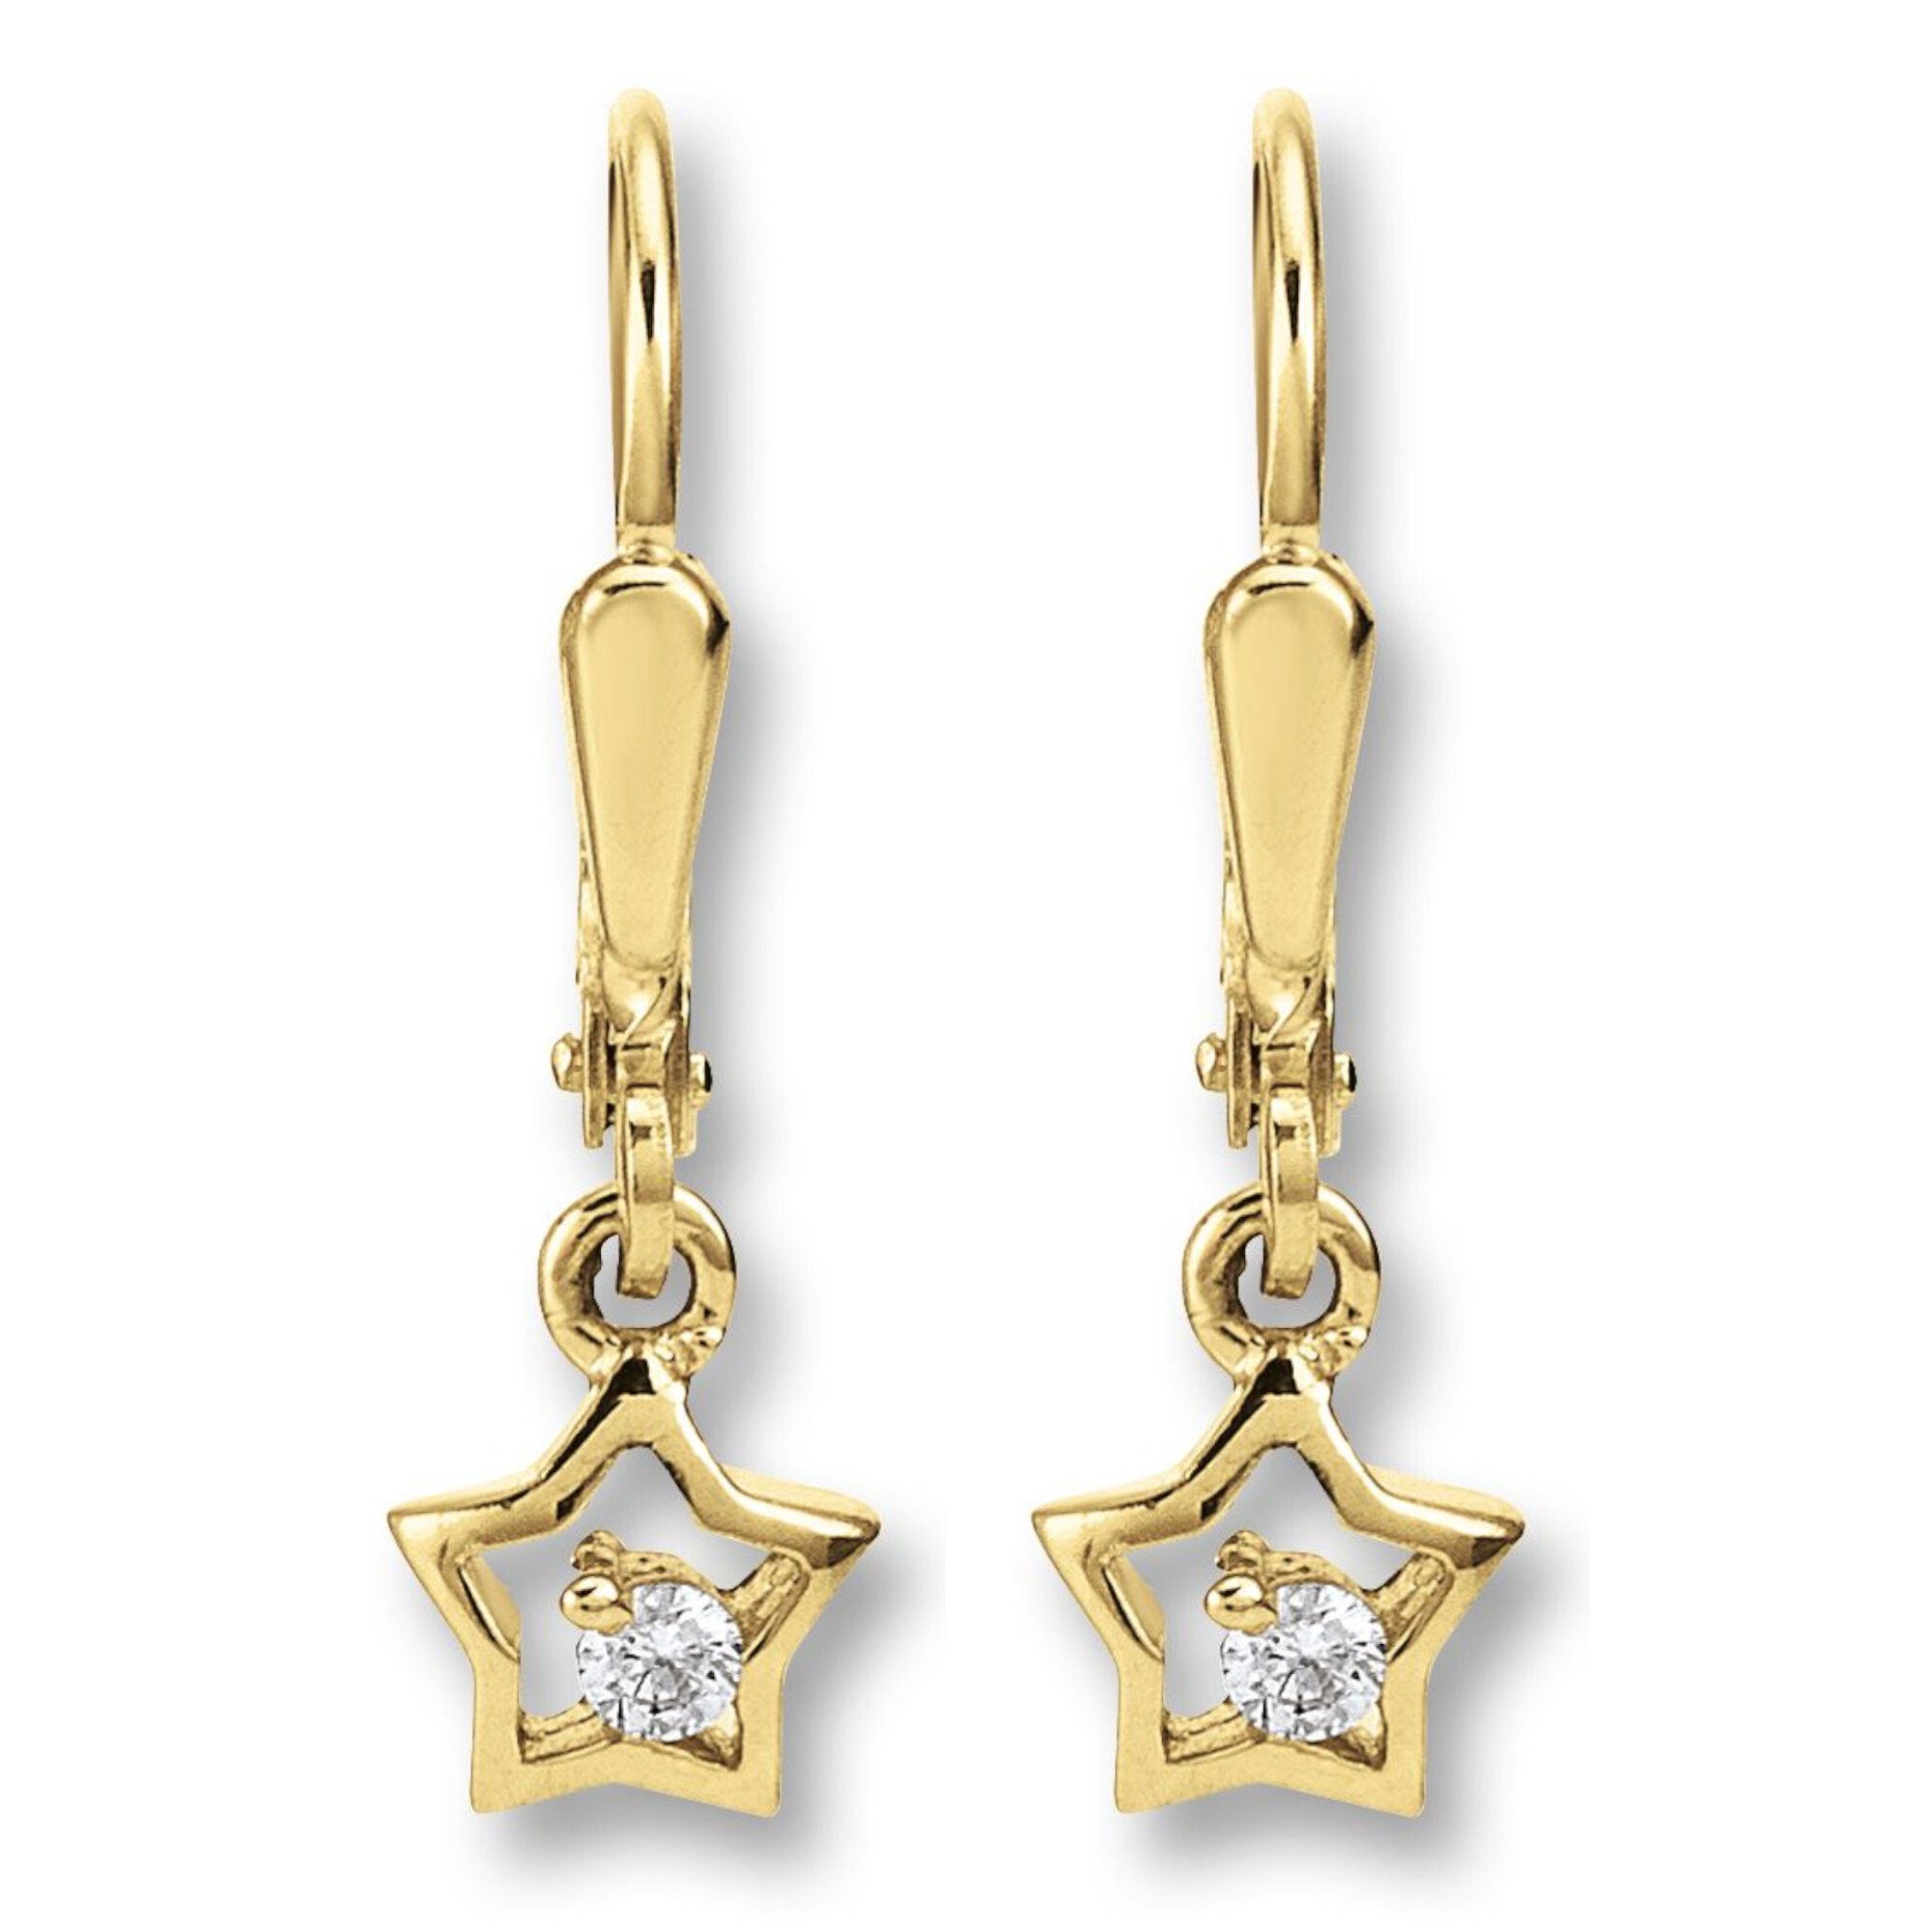 ONE ELEMENT Paar Ohrringe Gold Stern Damen Schmuck aus Gelbgold, Stern Ohrhänger Ohrhänger Zirkonia 333